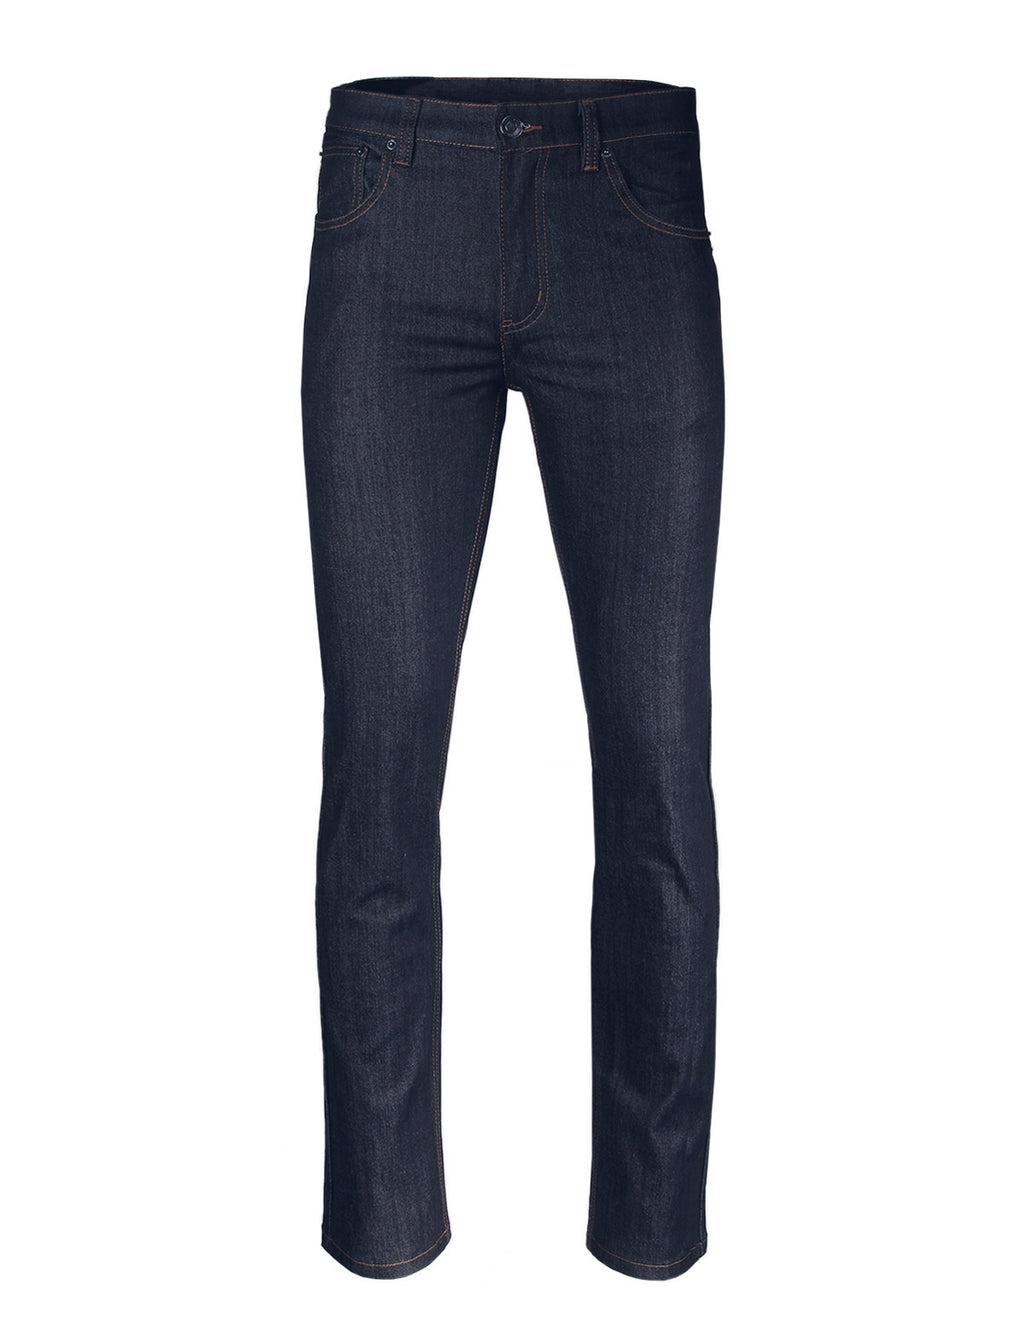 ZIMEGO Men's Slim Cut Skinny Fit Stretch Raw Denim Pants Classic Five Pocket Jeans - INDIGO TIMBER